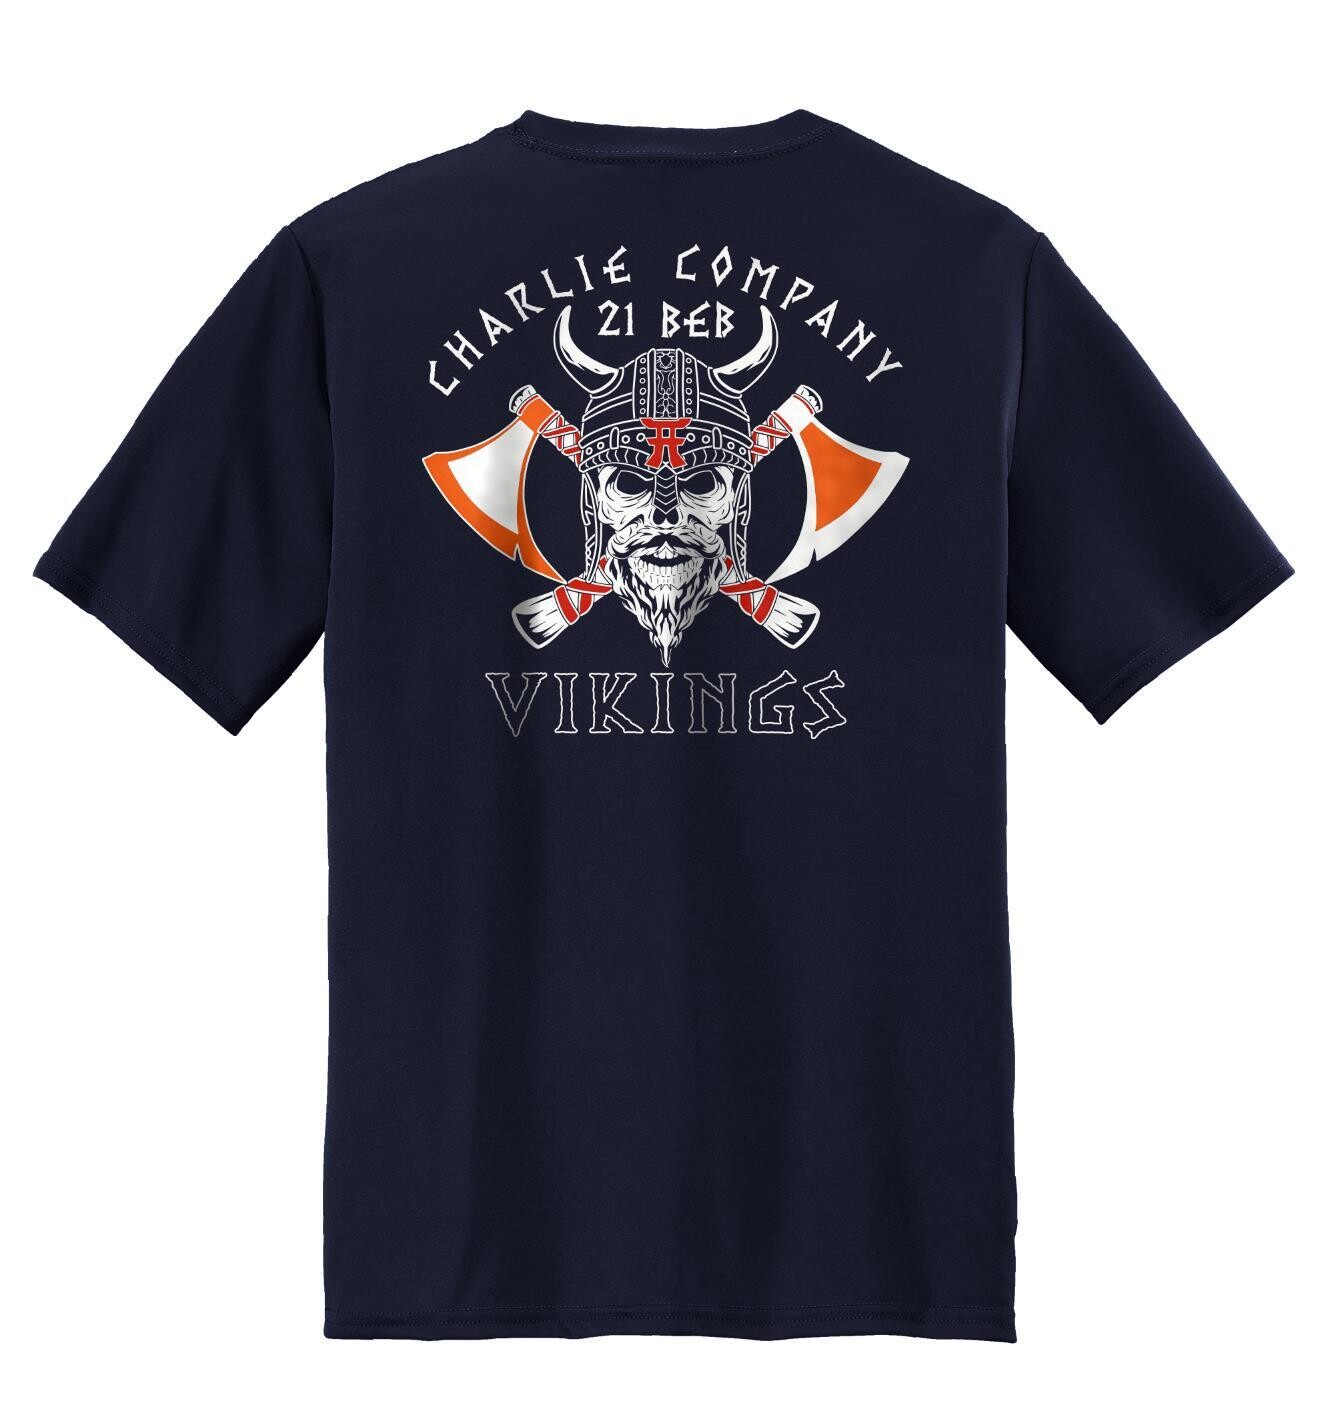 C CO "Vikings" 21 BEB Shirt